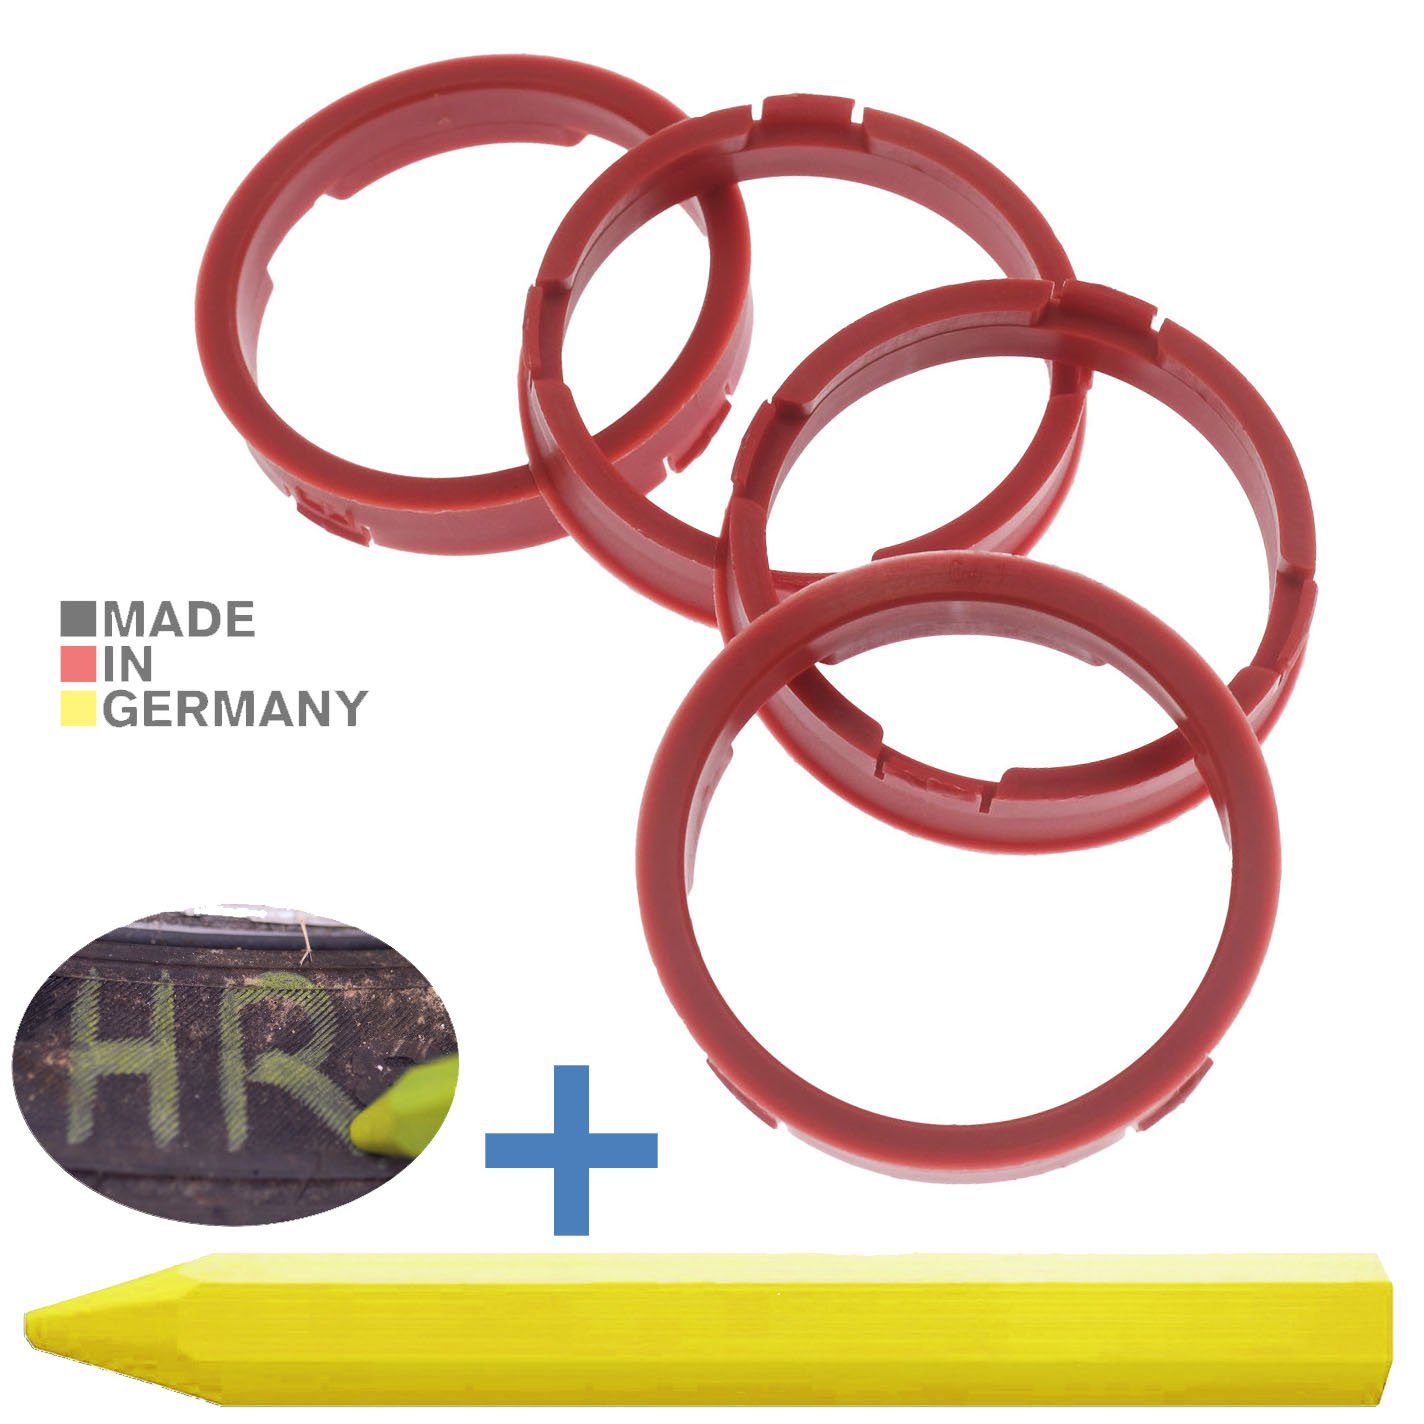 RKC Reifenstift 4X Zentrierringe Dunkelrot Felgen Ringe + 1x Reifen Kreide Fett Stift, Maße: 73,1 x 64,1 mm | Reifenstifte